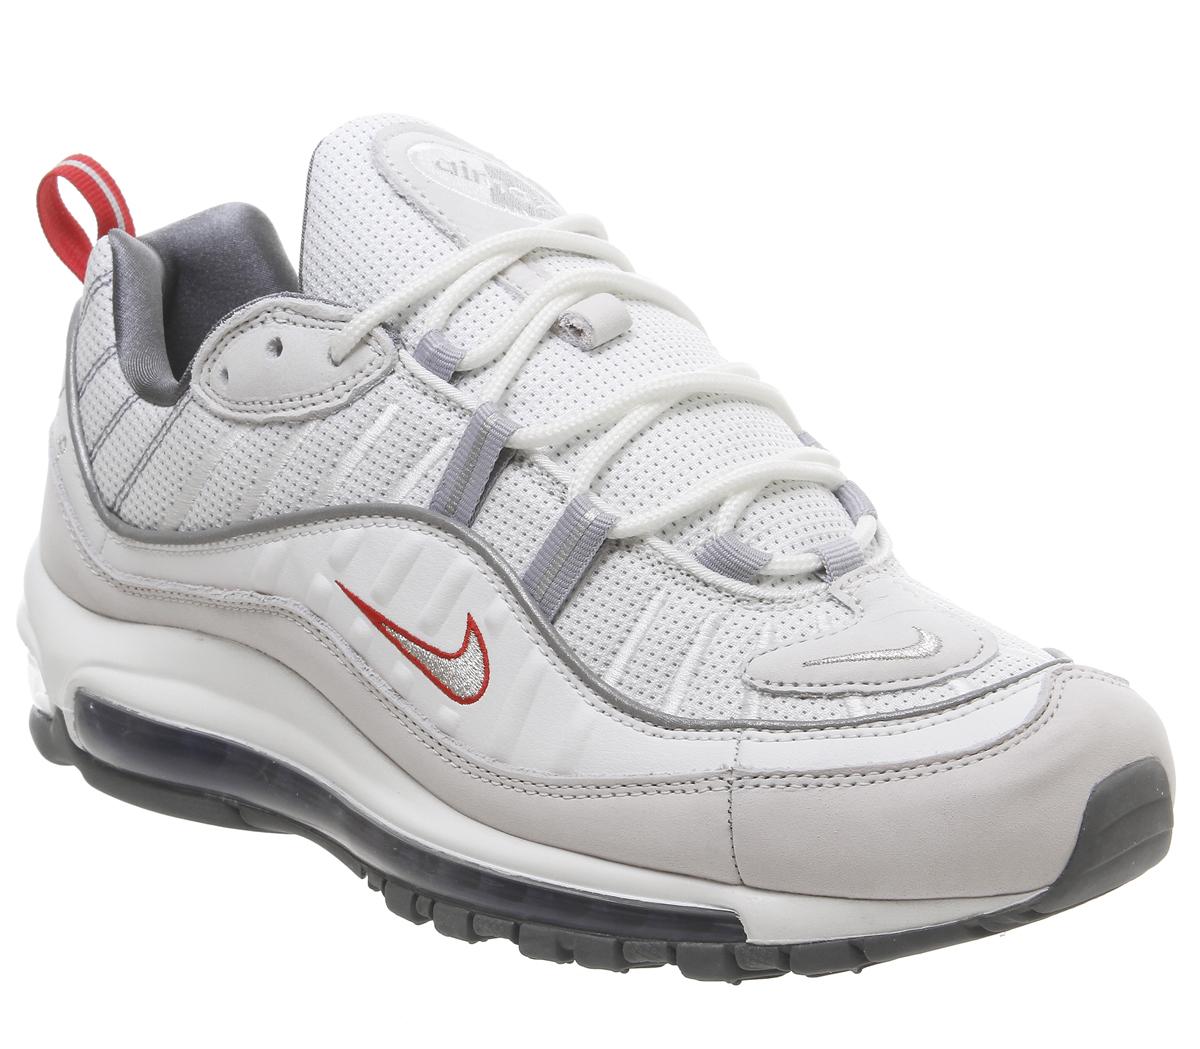 NikeAir Max 98 TrainersSummit White Metallic Silver